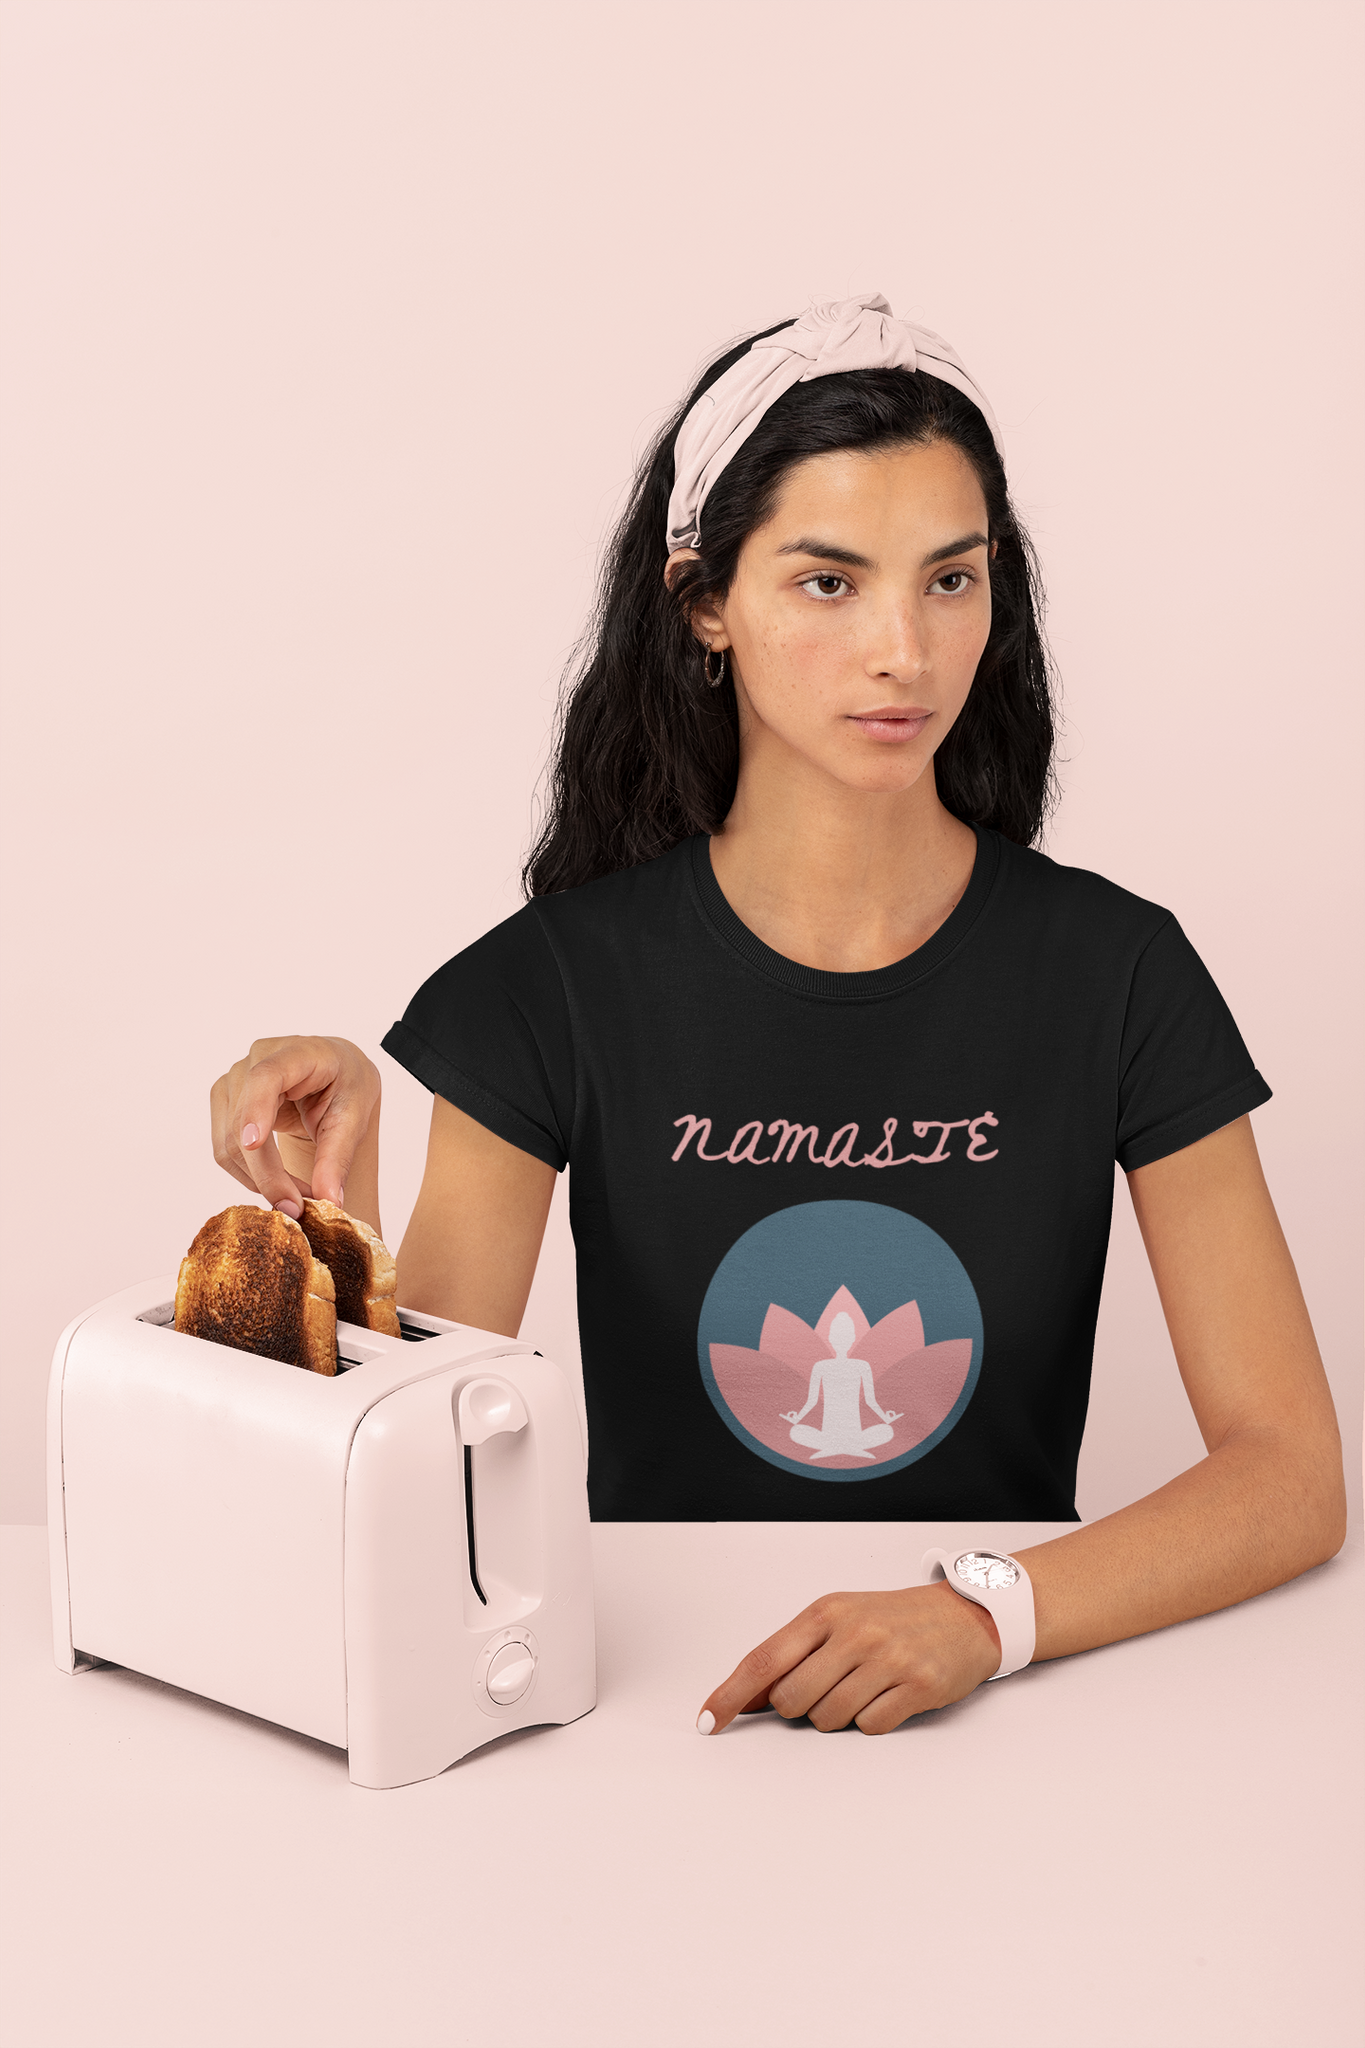 Namaste with Lotus Yoga T-shirt